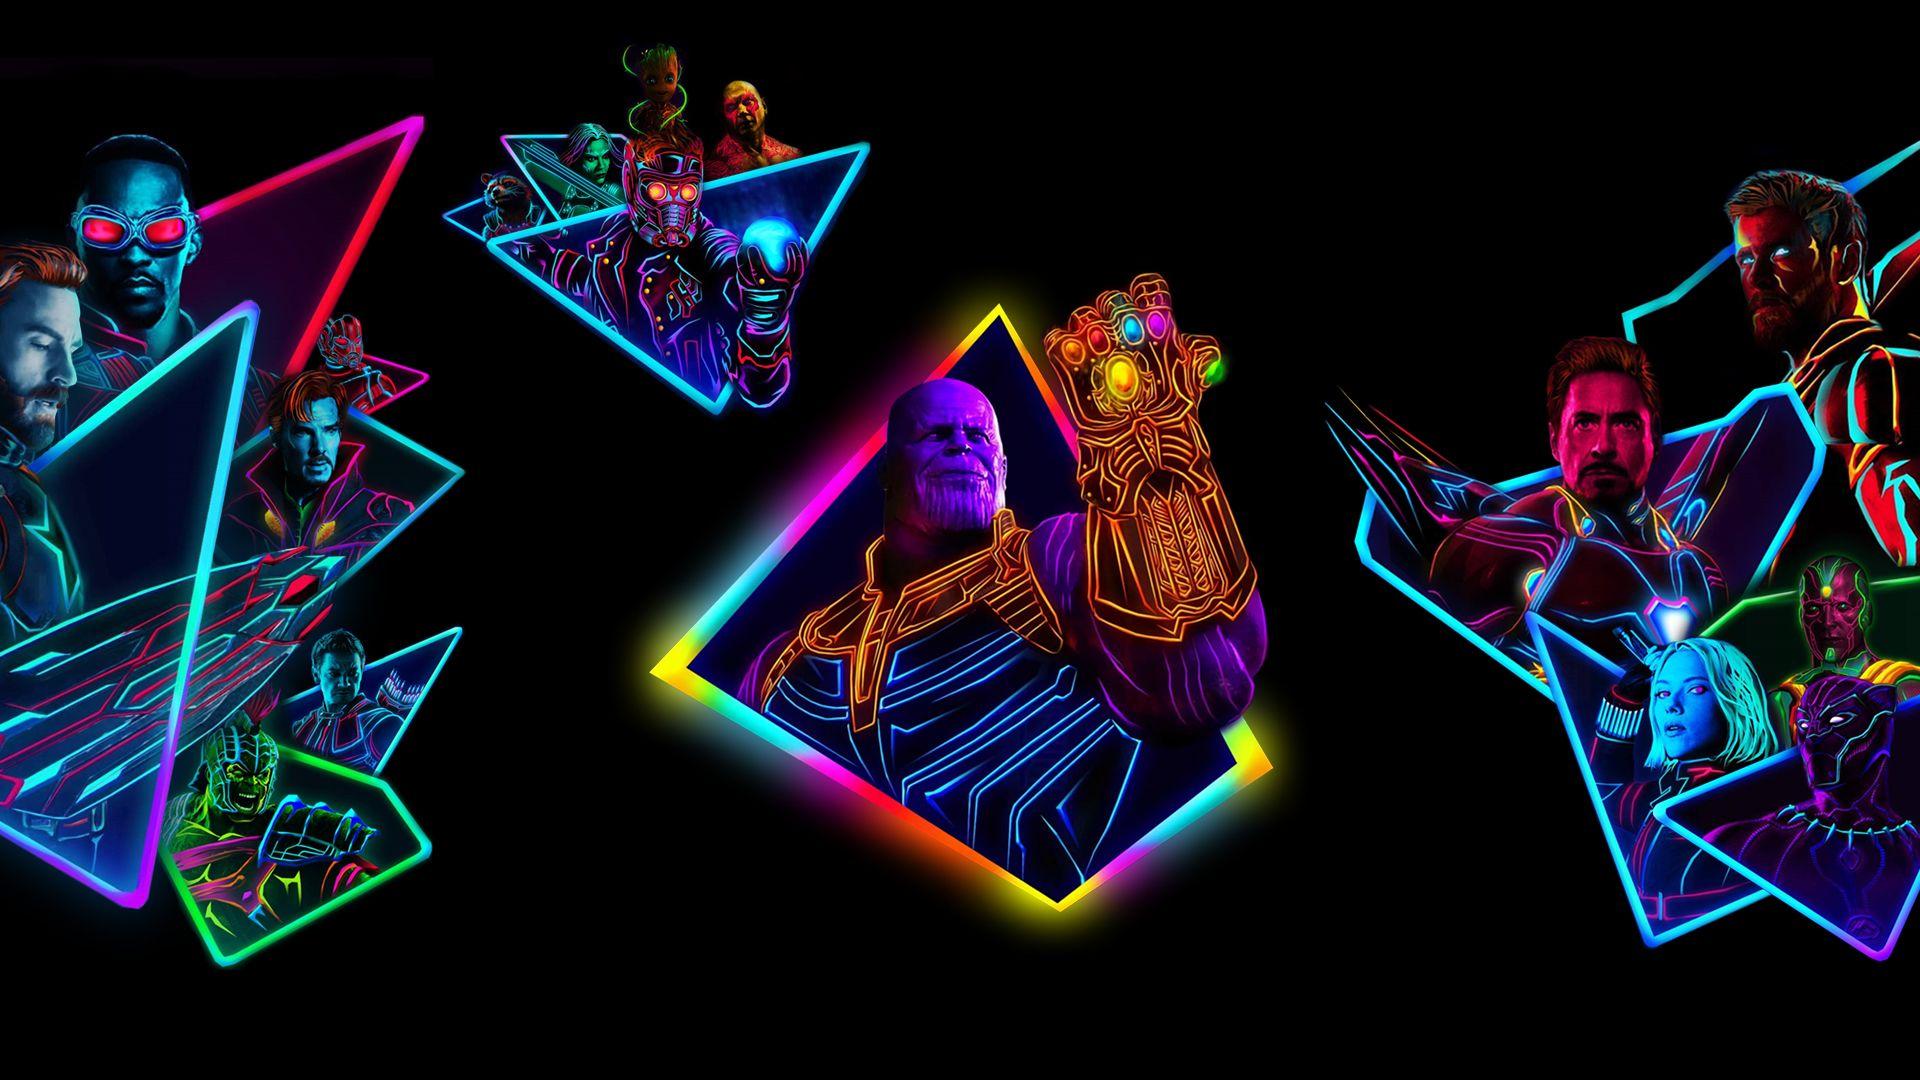 Avengers Infinity War 80s Neon Style Art Wallpaper, HD Movies 4K